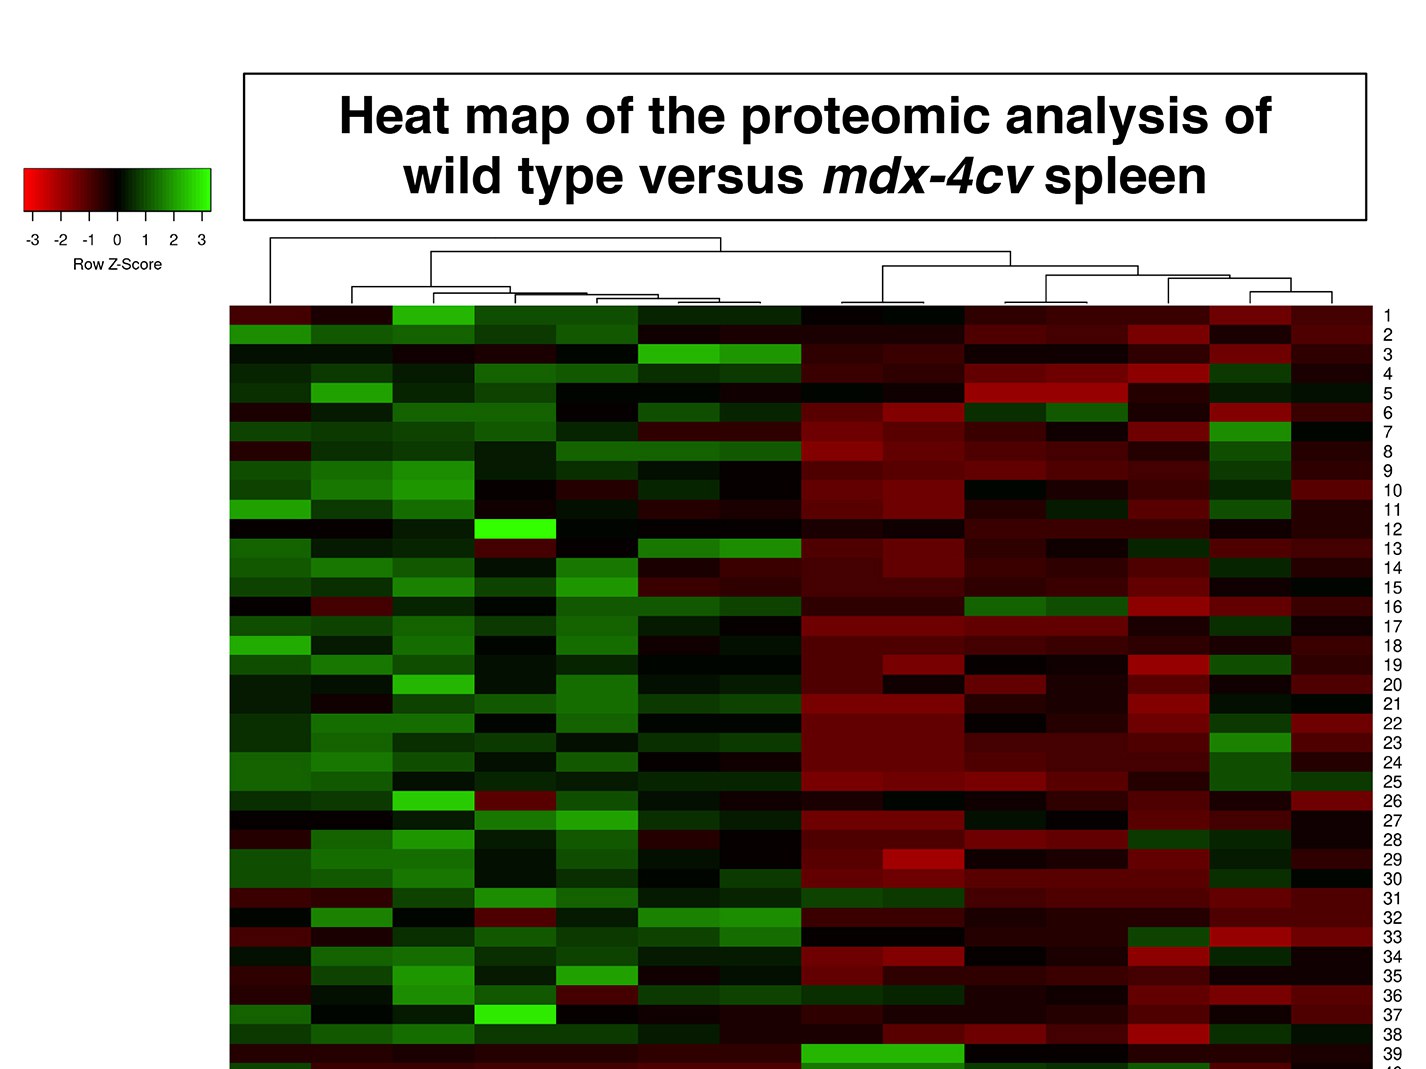 "Heat map" of proteome analysis: